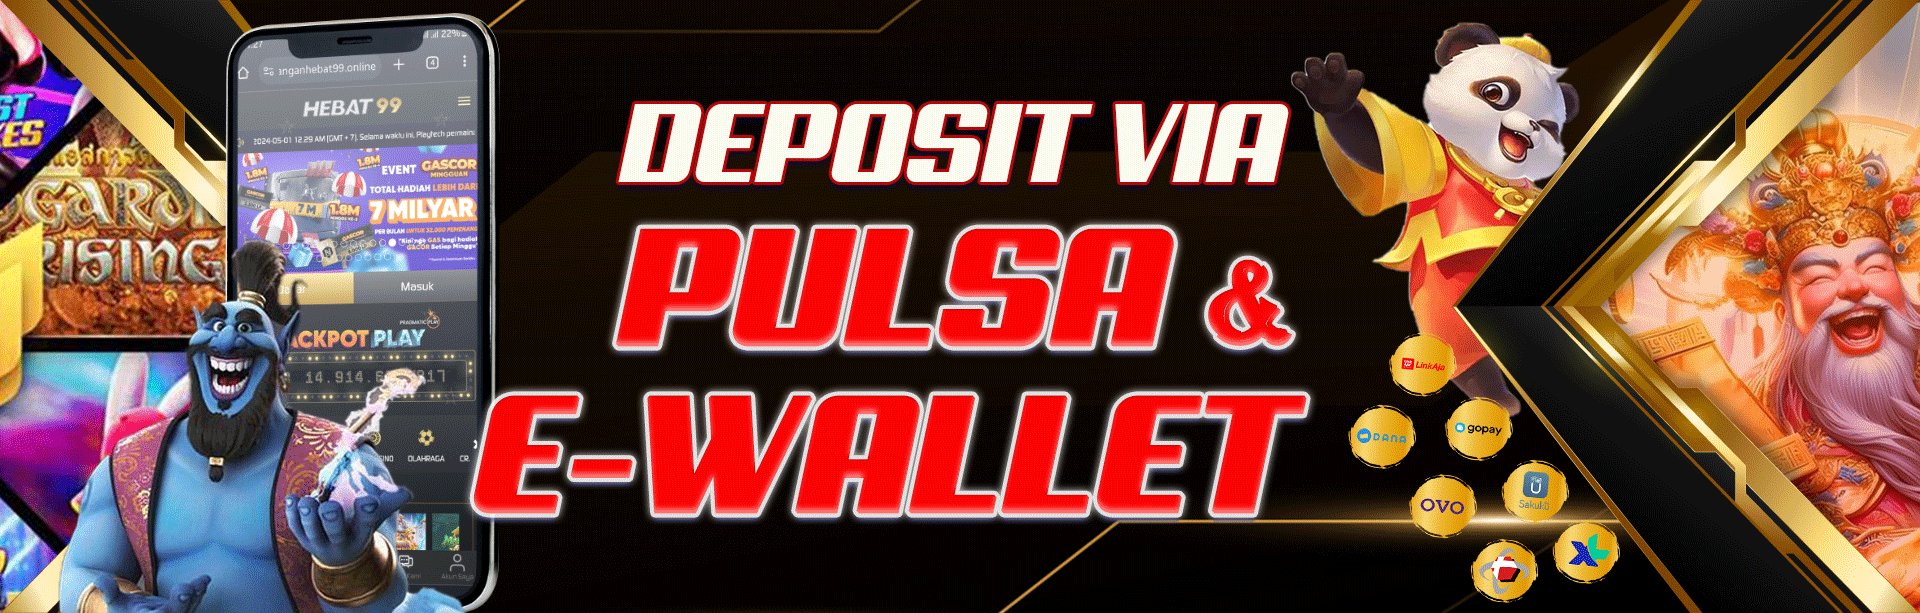 DEPOSIT VIA E - WALLET & PULSA